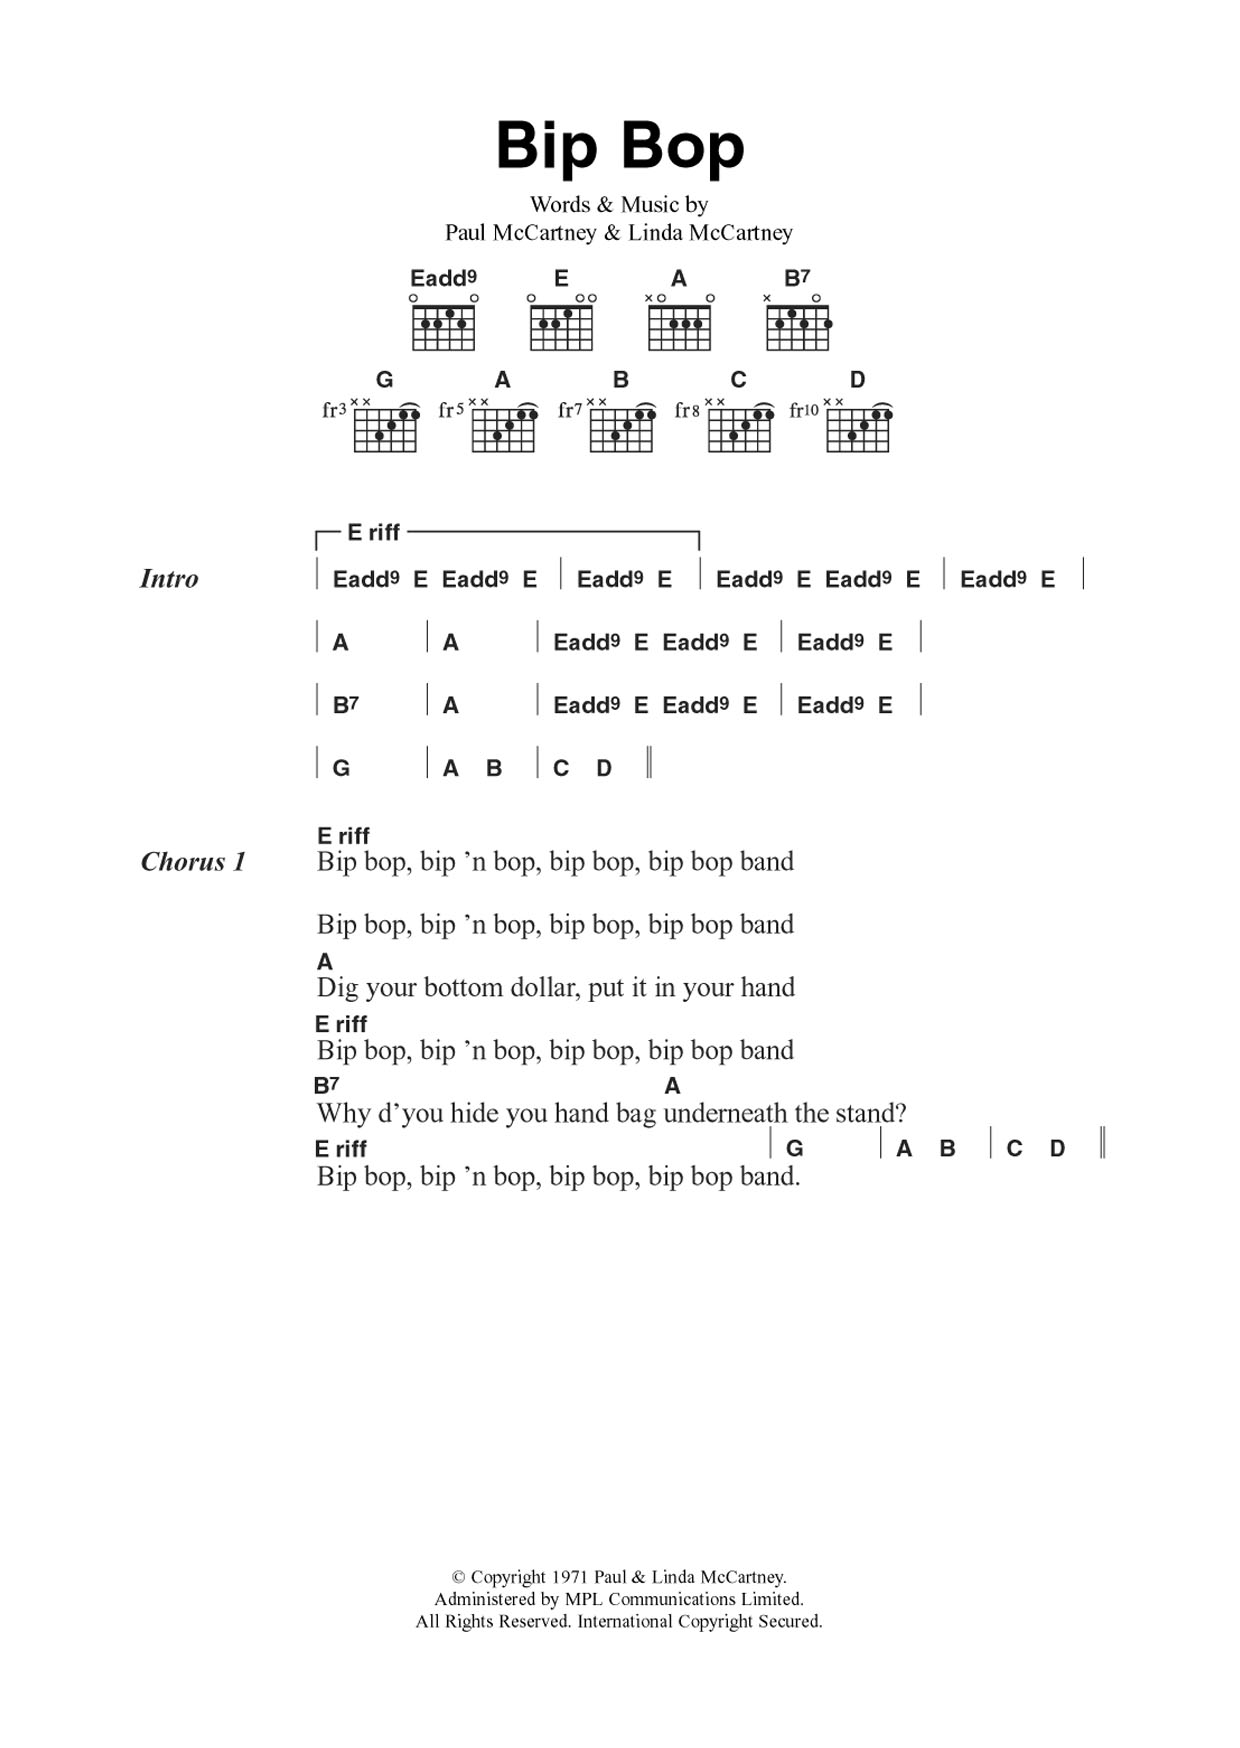 Wings Bip Bop/Hey Diddle Sheet Music Notes & Chords for Guitar Chords/Lyrics - Download or Print PDF